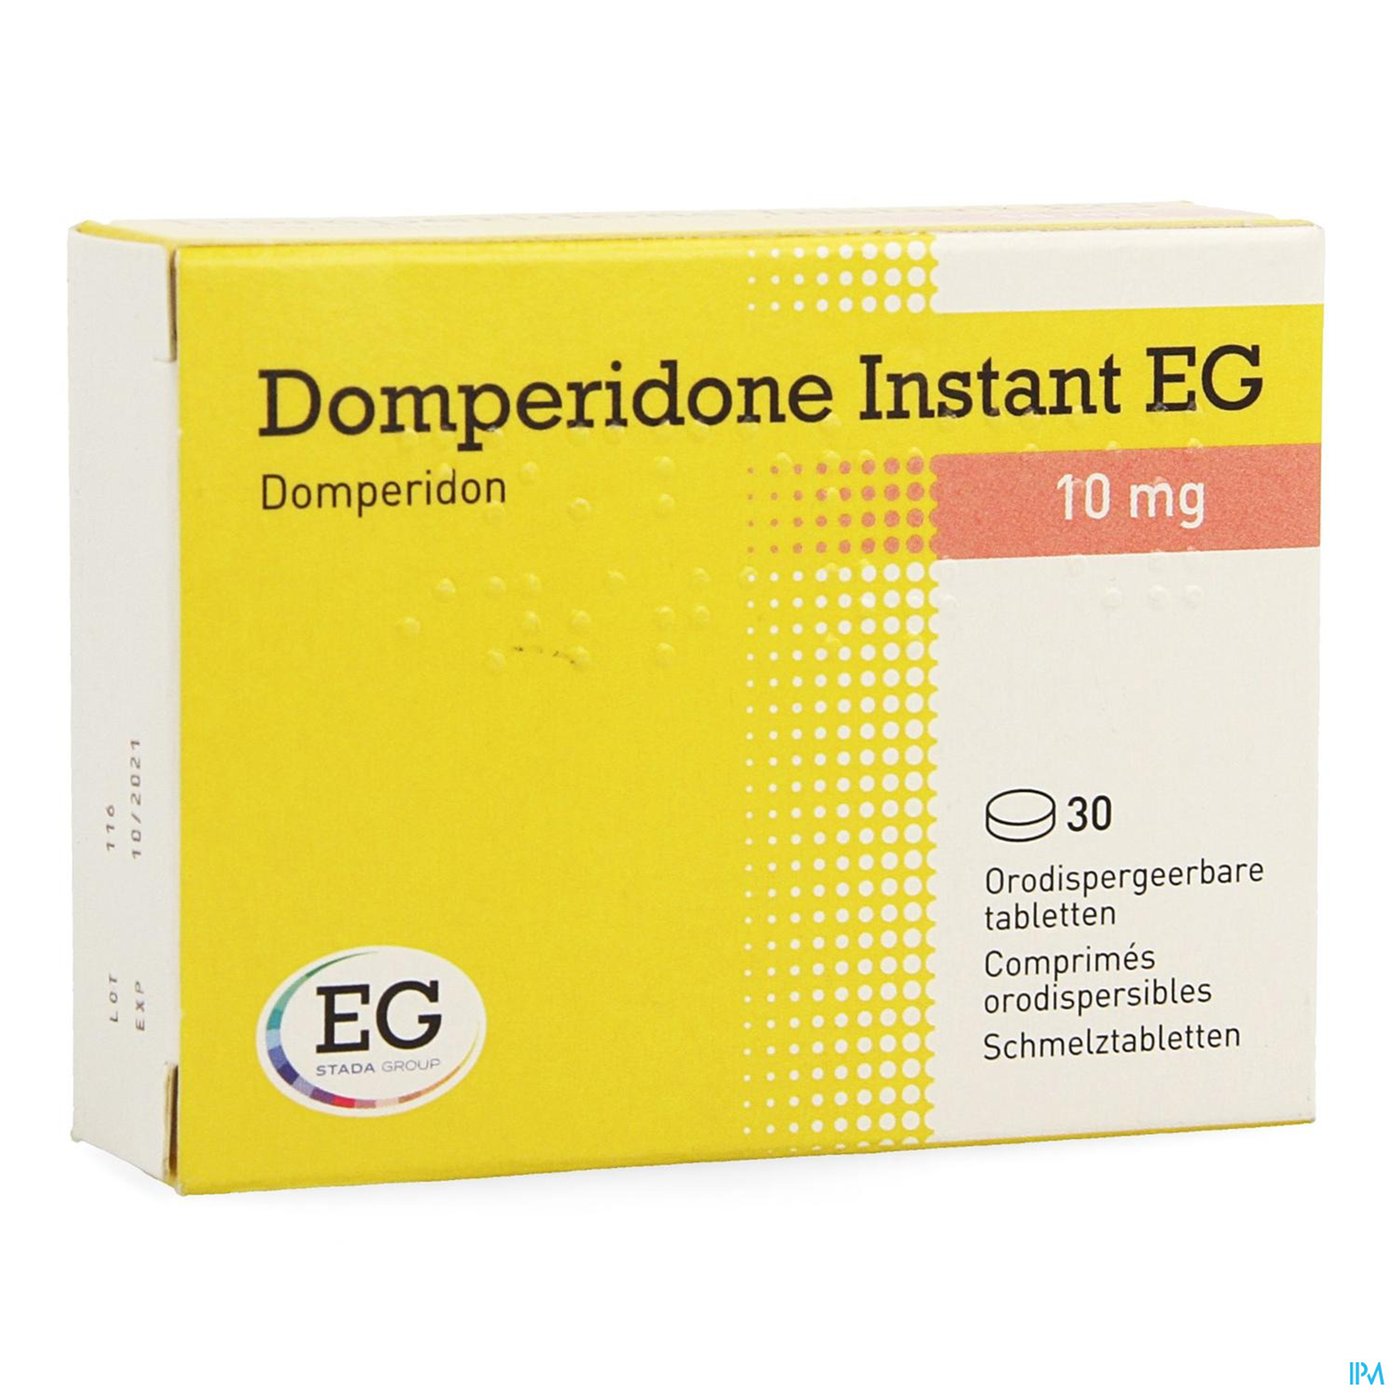 Domperidone Instant EG Orodisp Tabl  30 X 10 Mg packshot